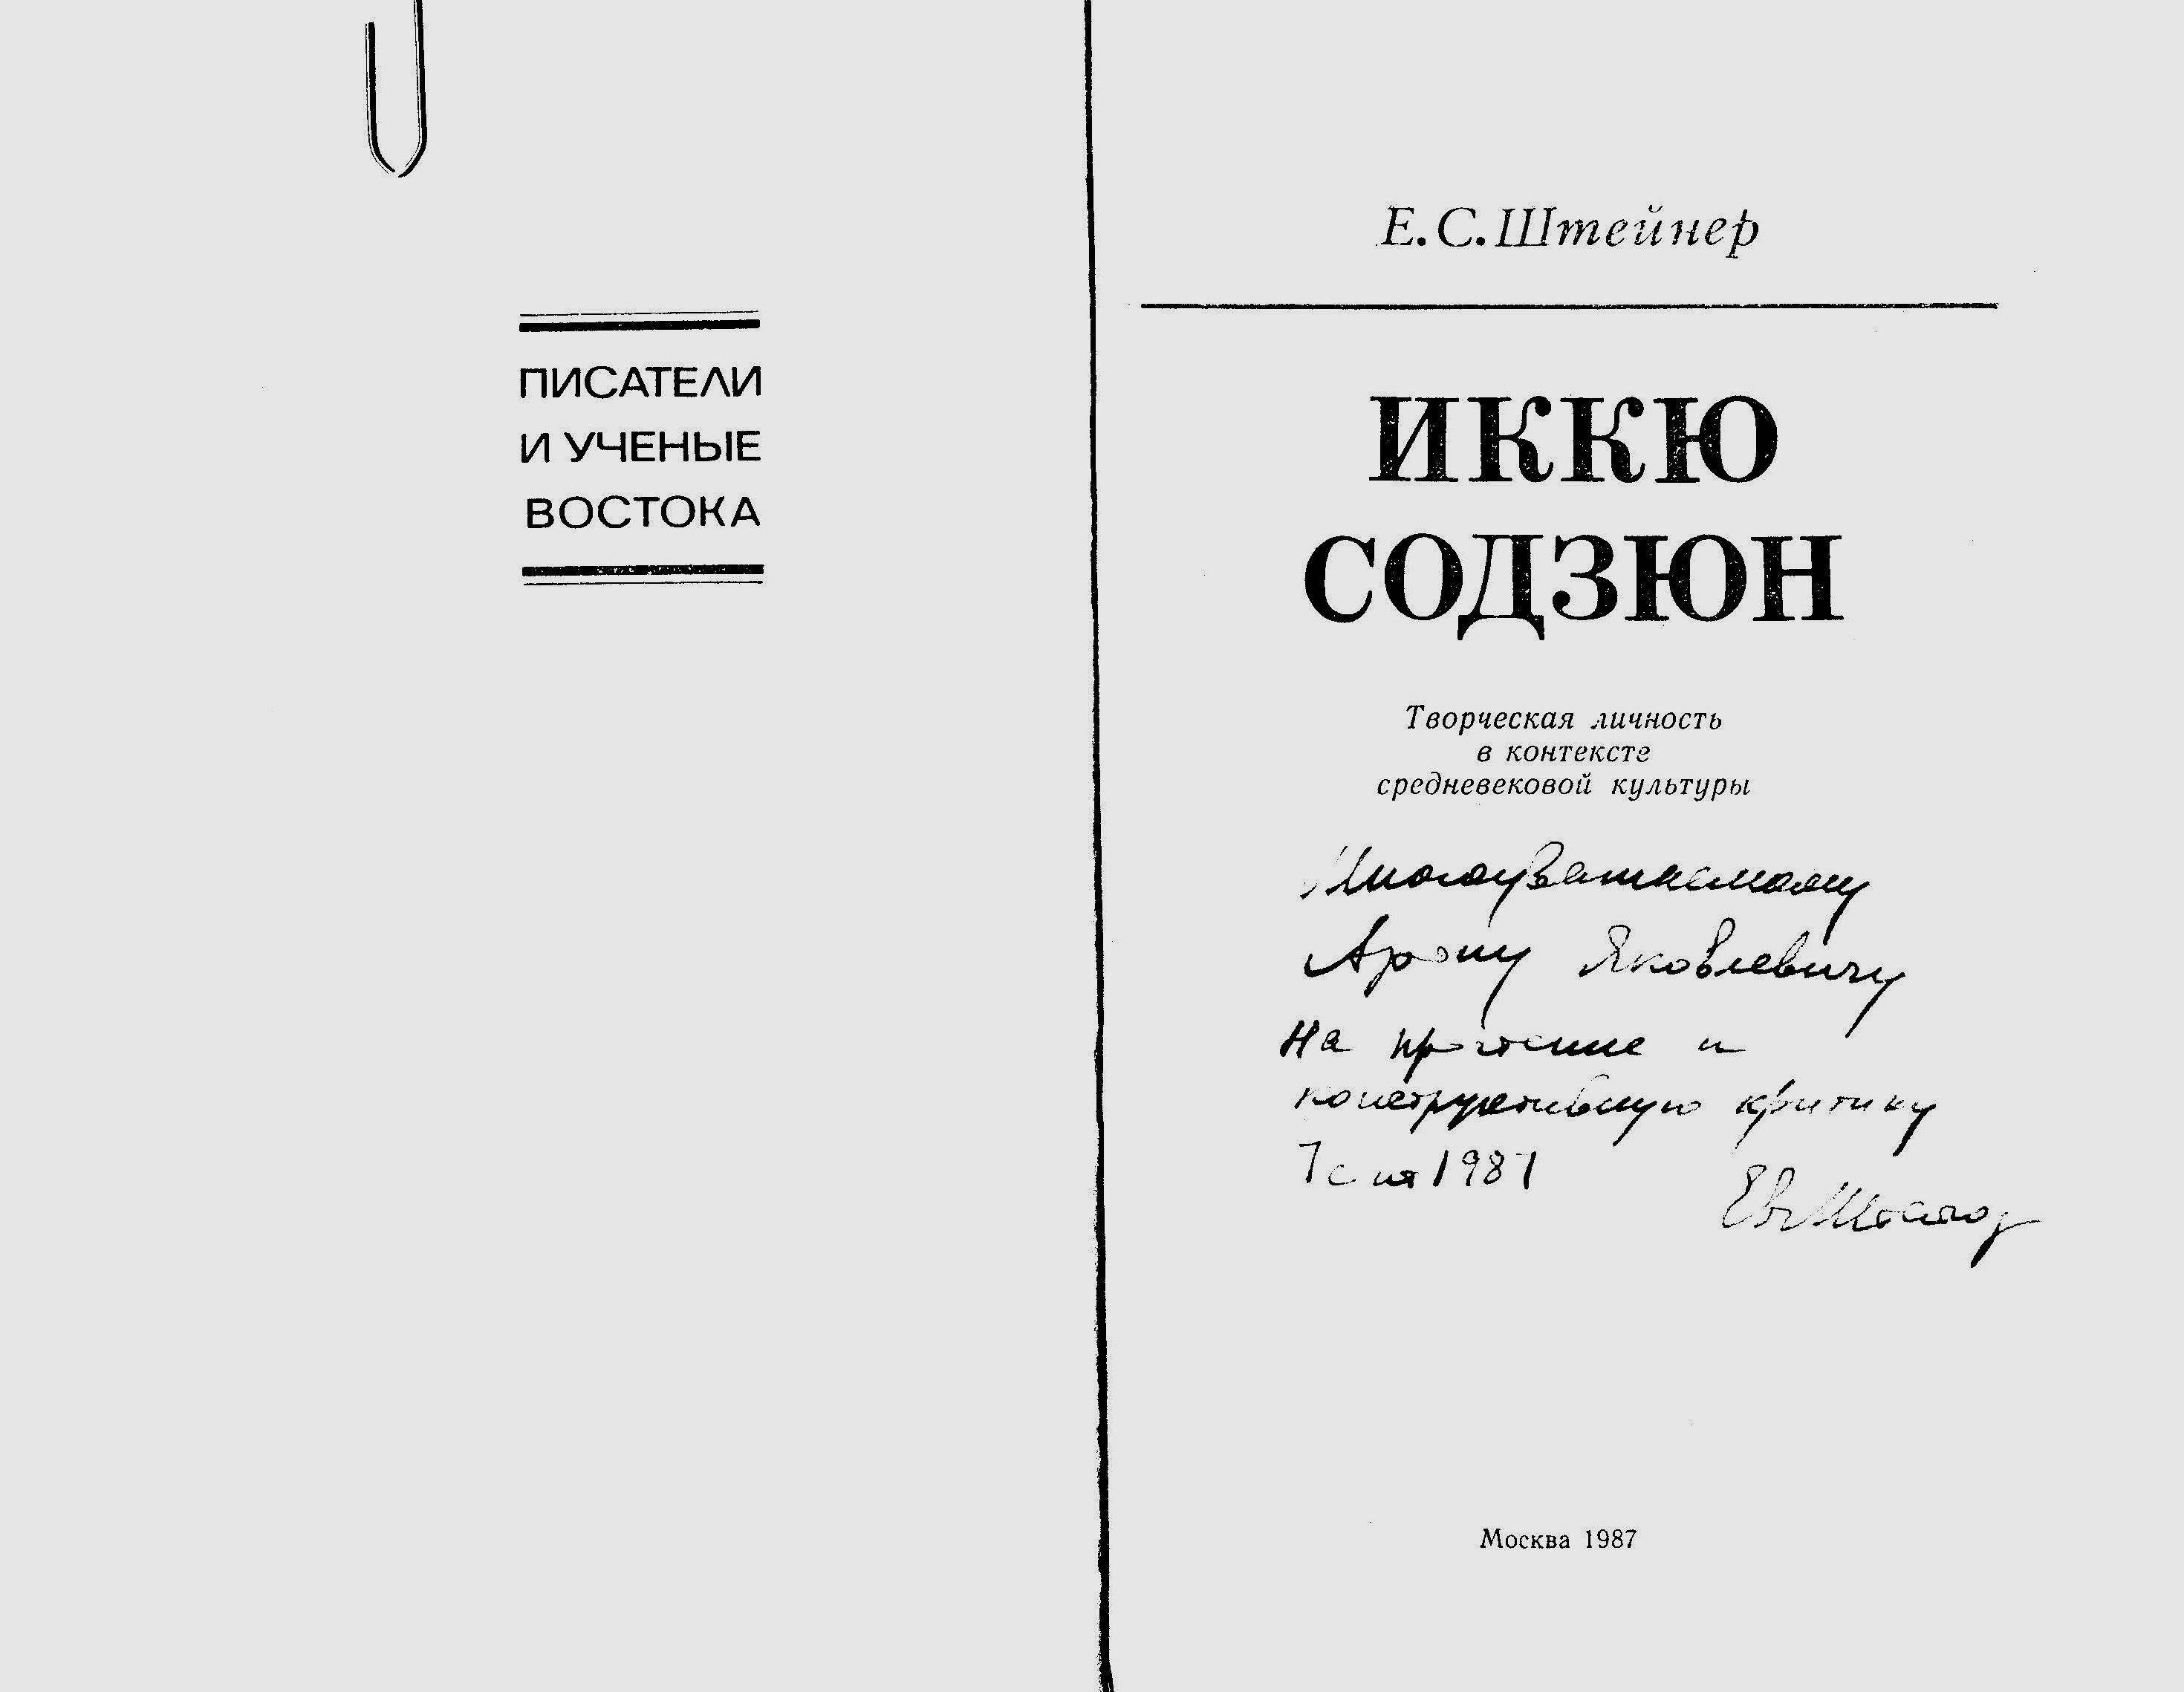 Дарственная надпись медиевисту Арону Яковлевичу Гуревичу (1987)